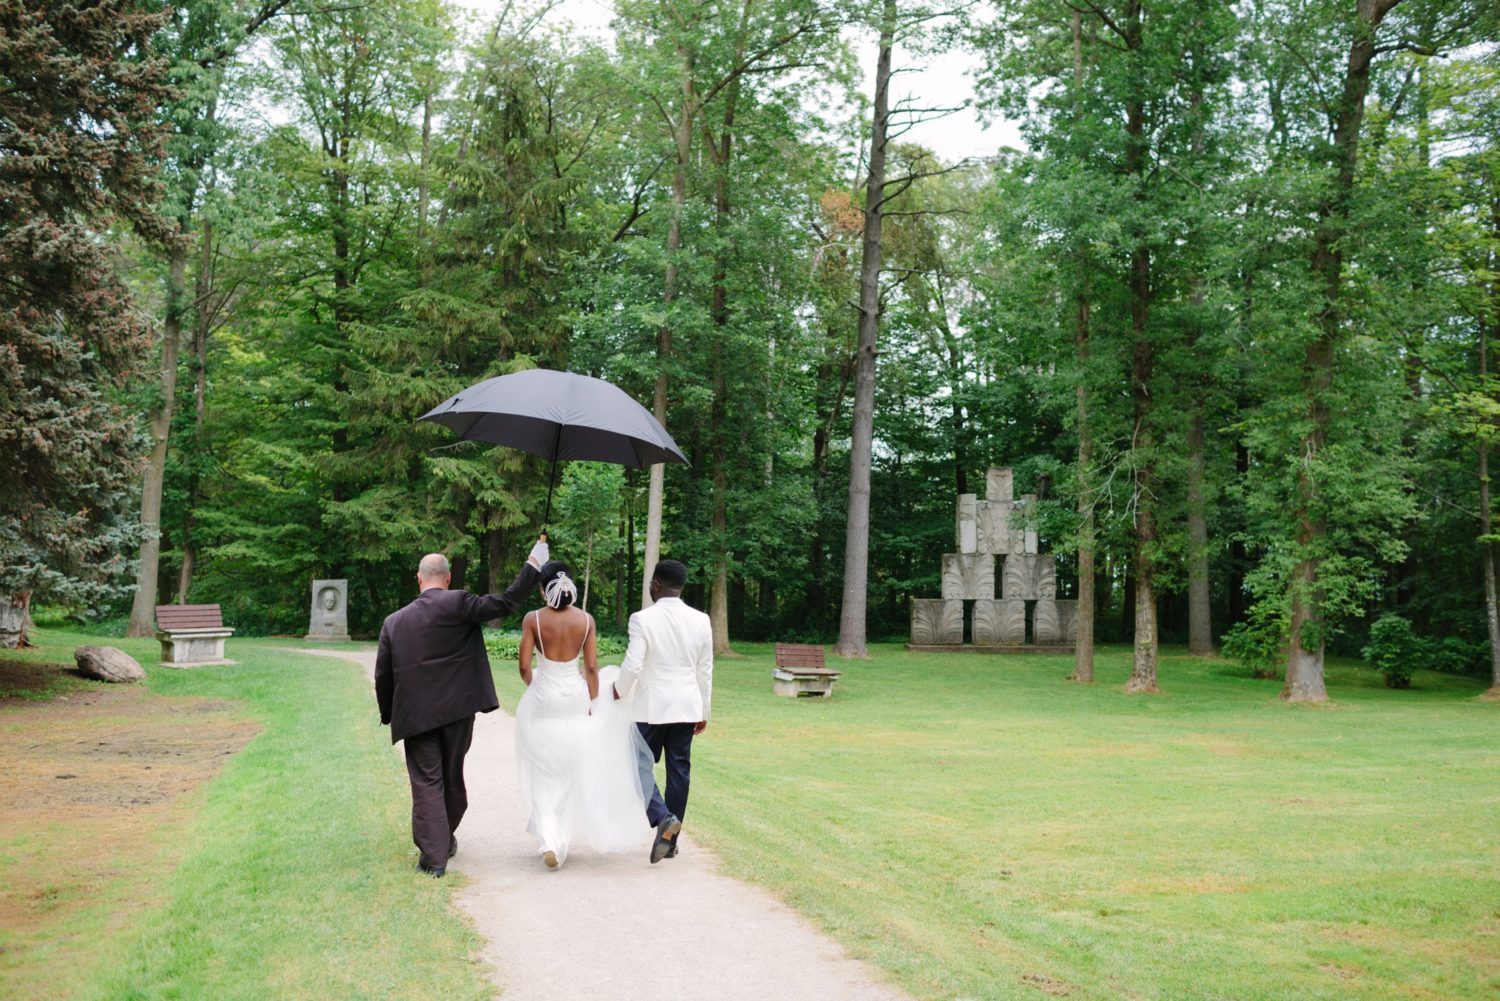 Wedding photography in rain, couple walking through a park.